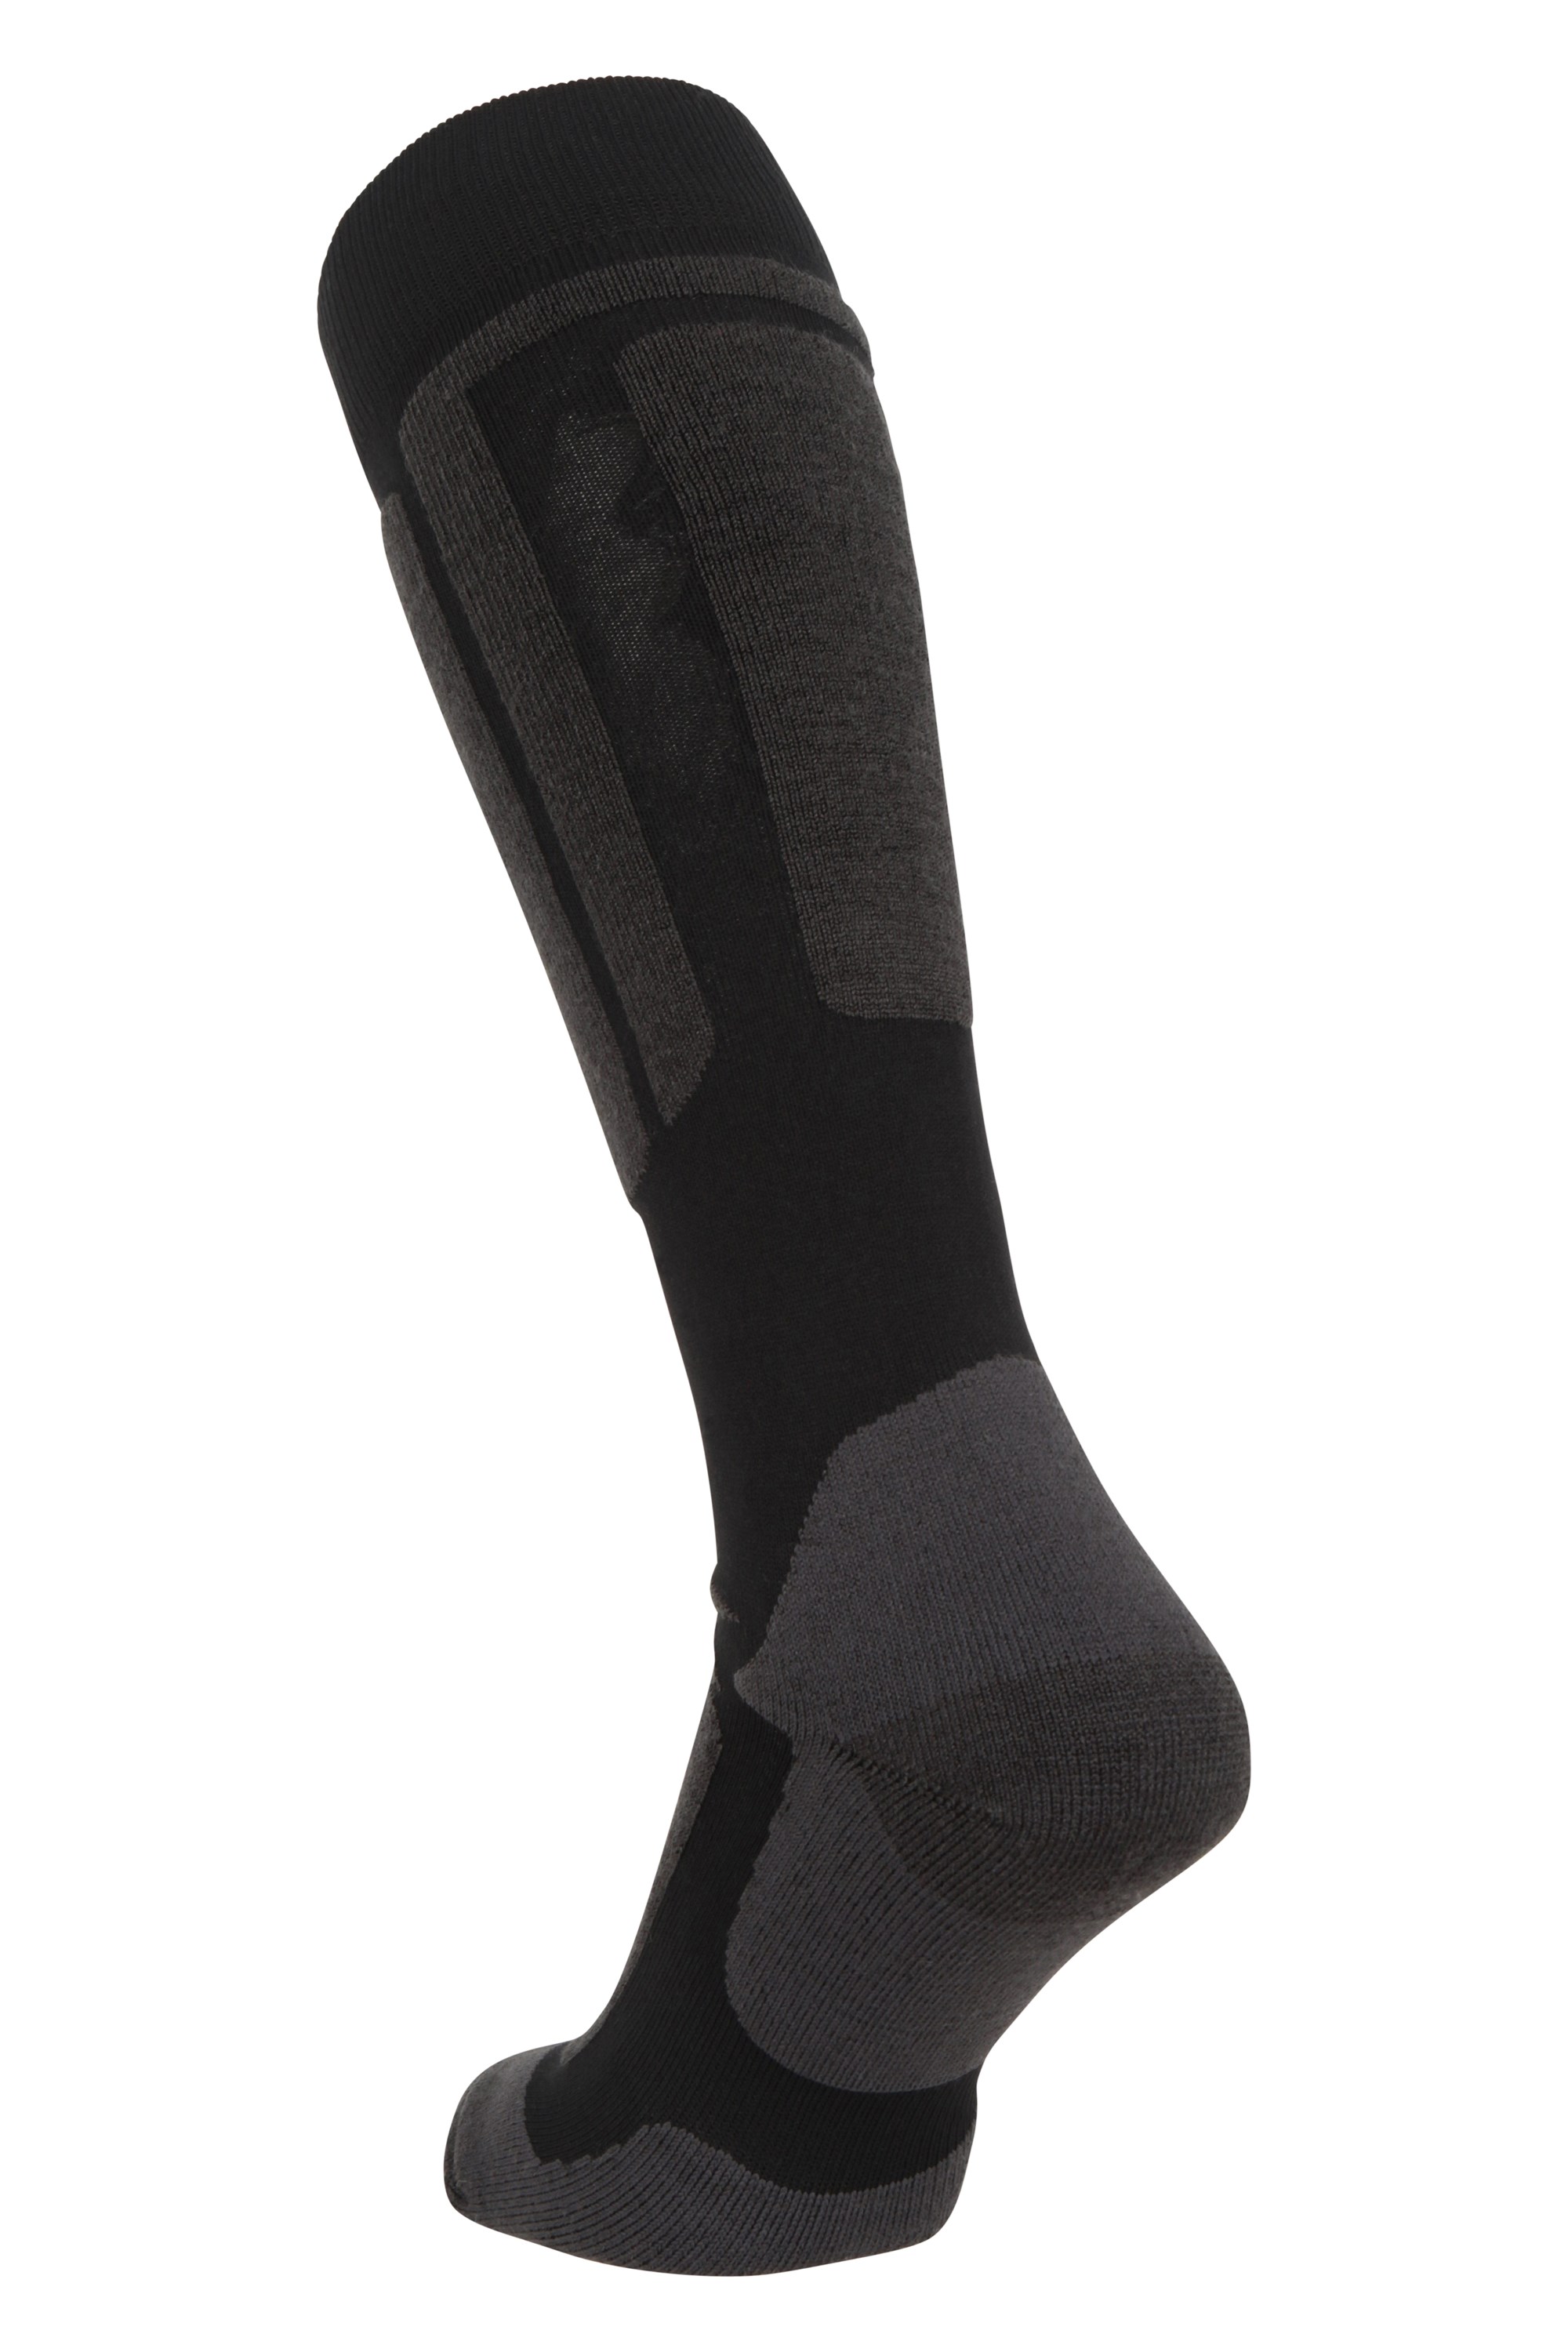 Extreme Mens Thermal Merino Knee Length Ski Socks